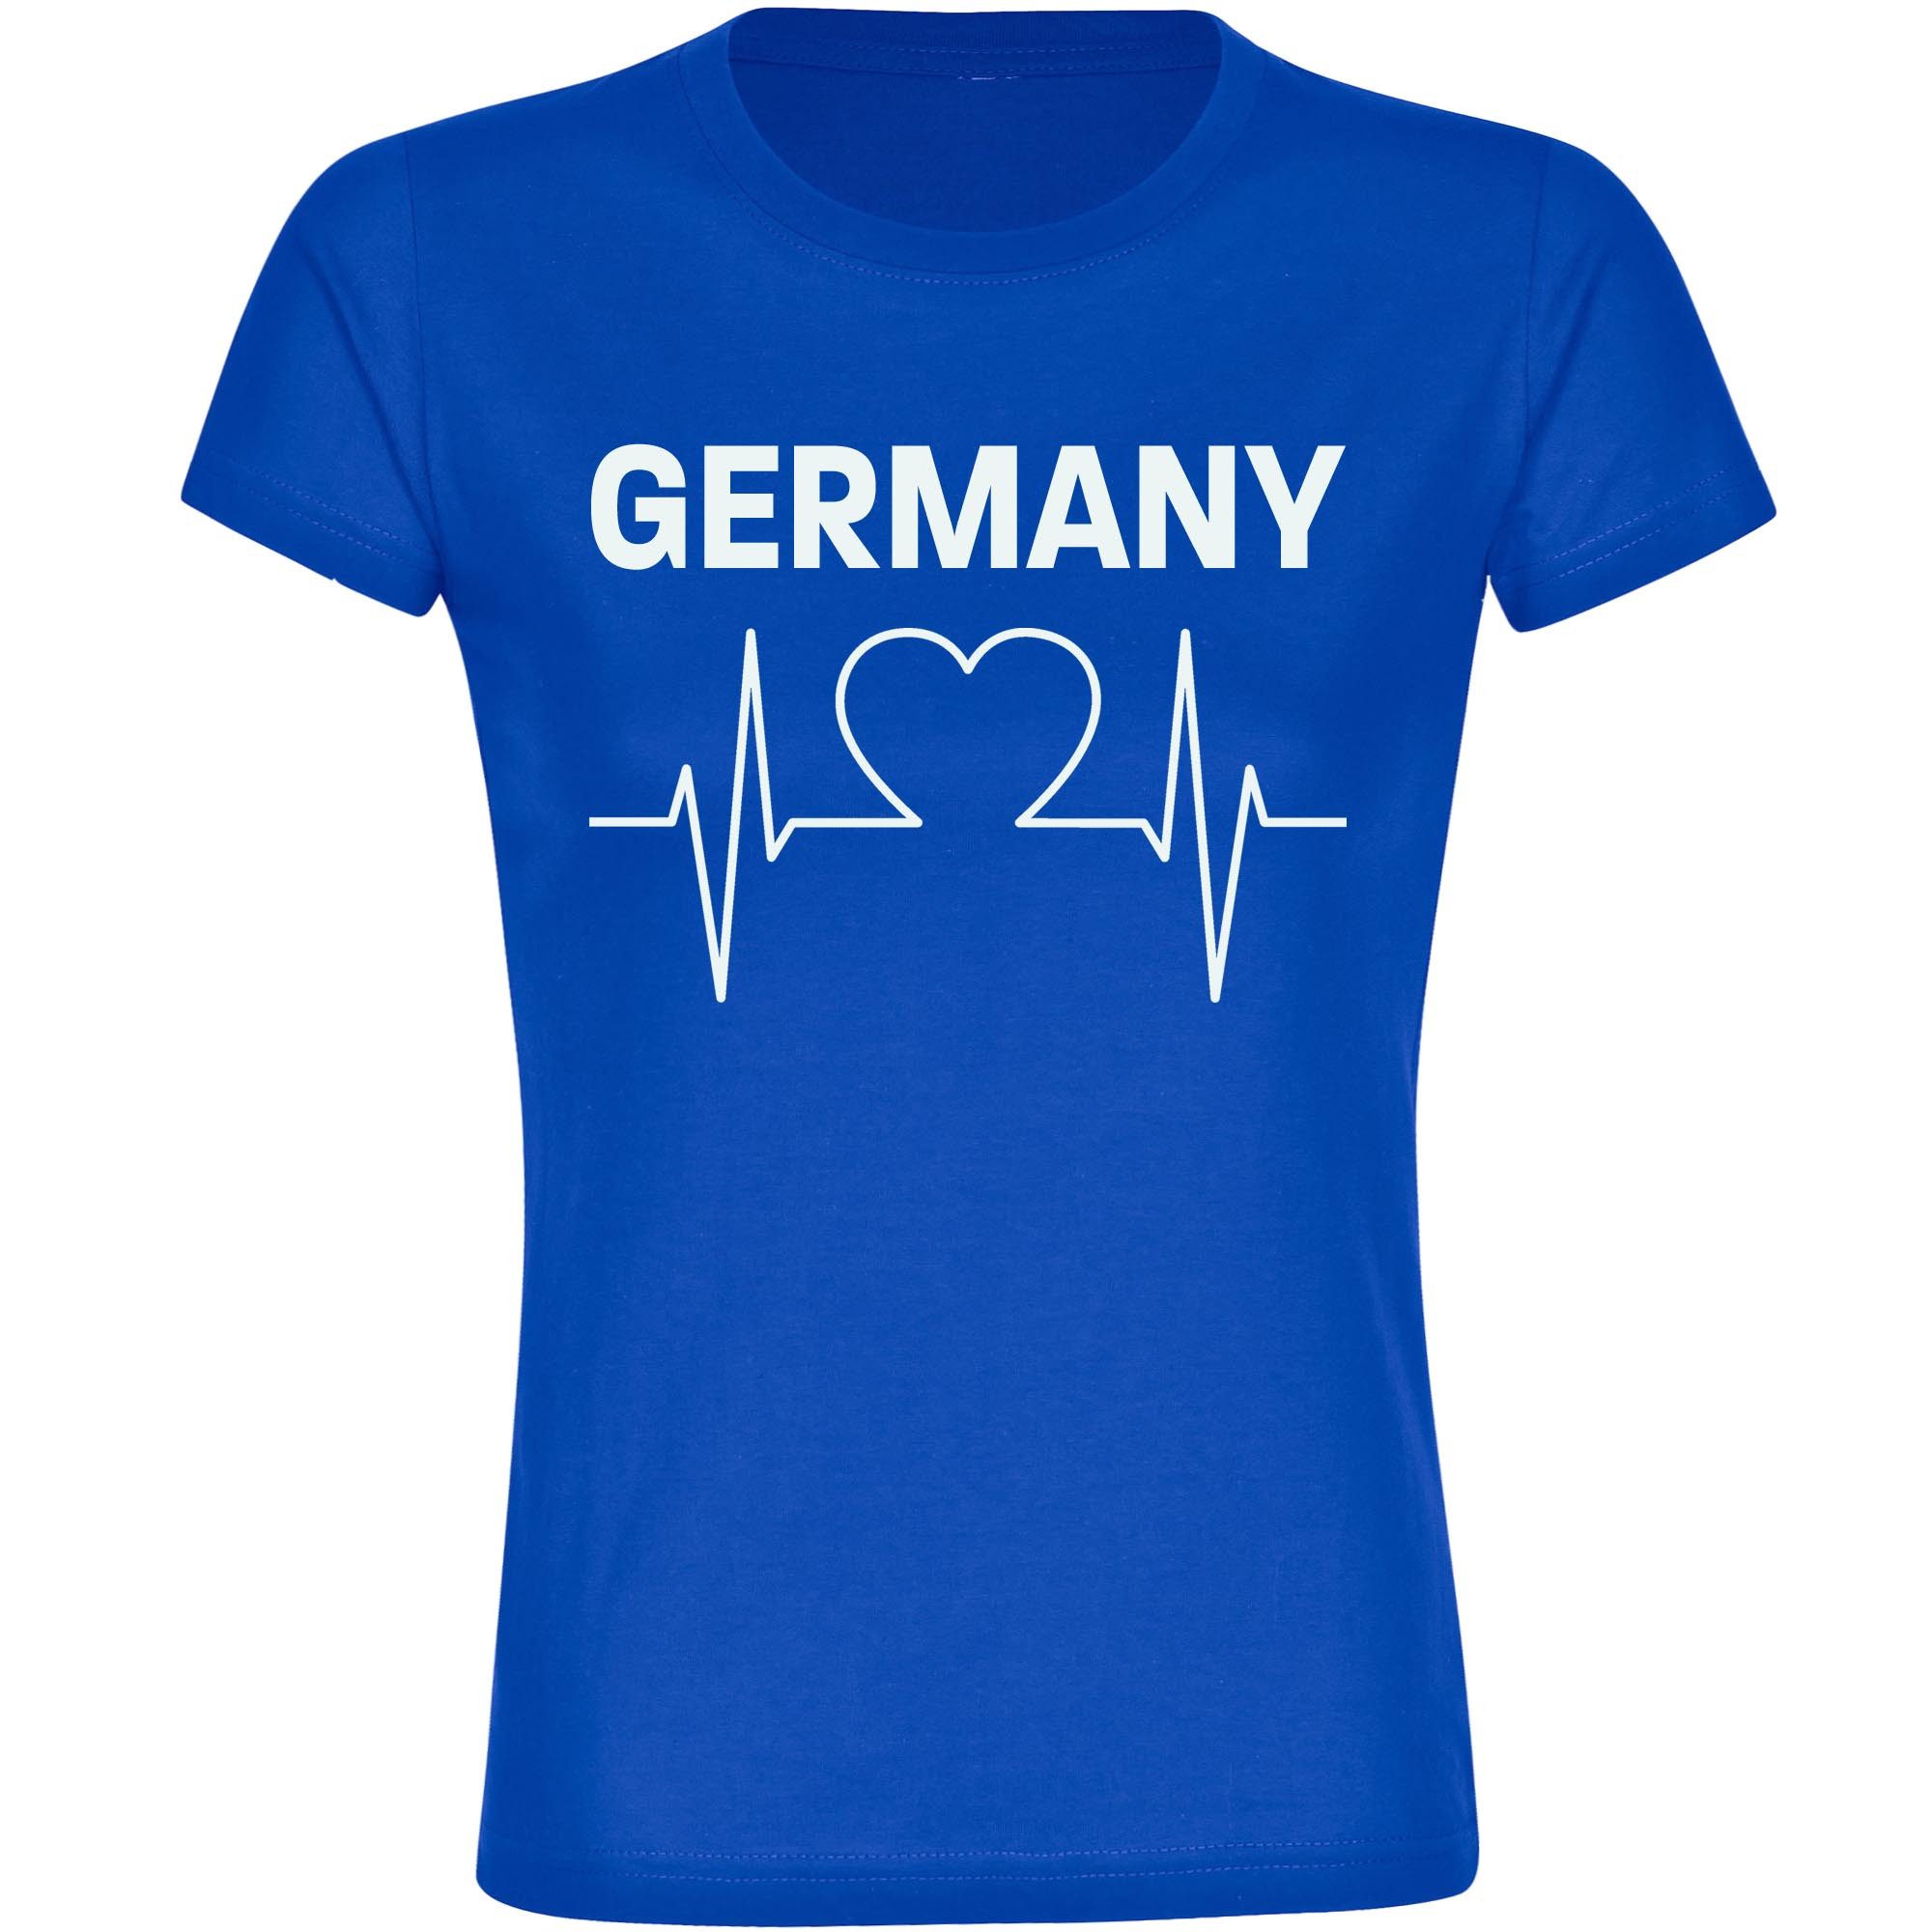 multifanshop T-Shirt Damen Germany - Herzschlag - Frauen